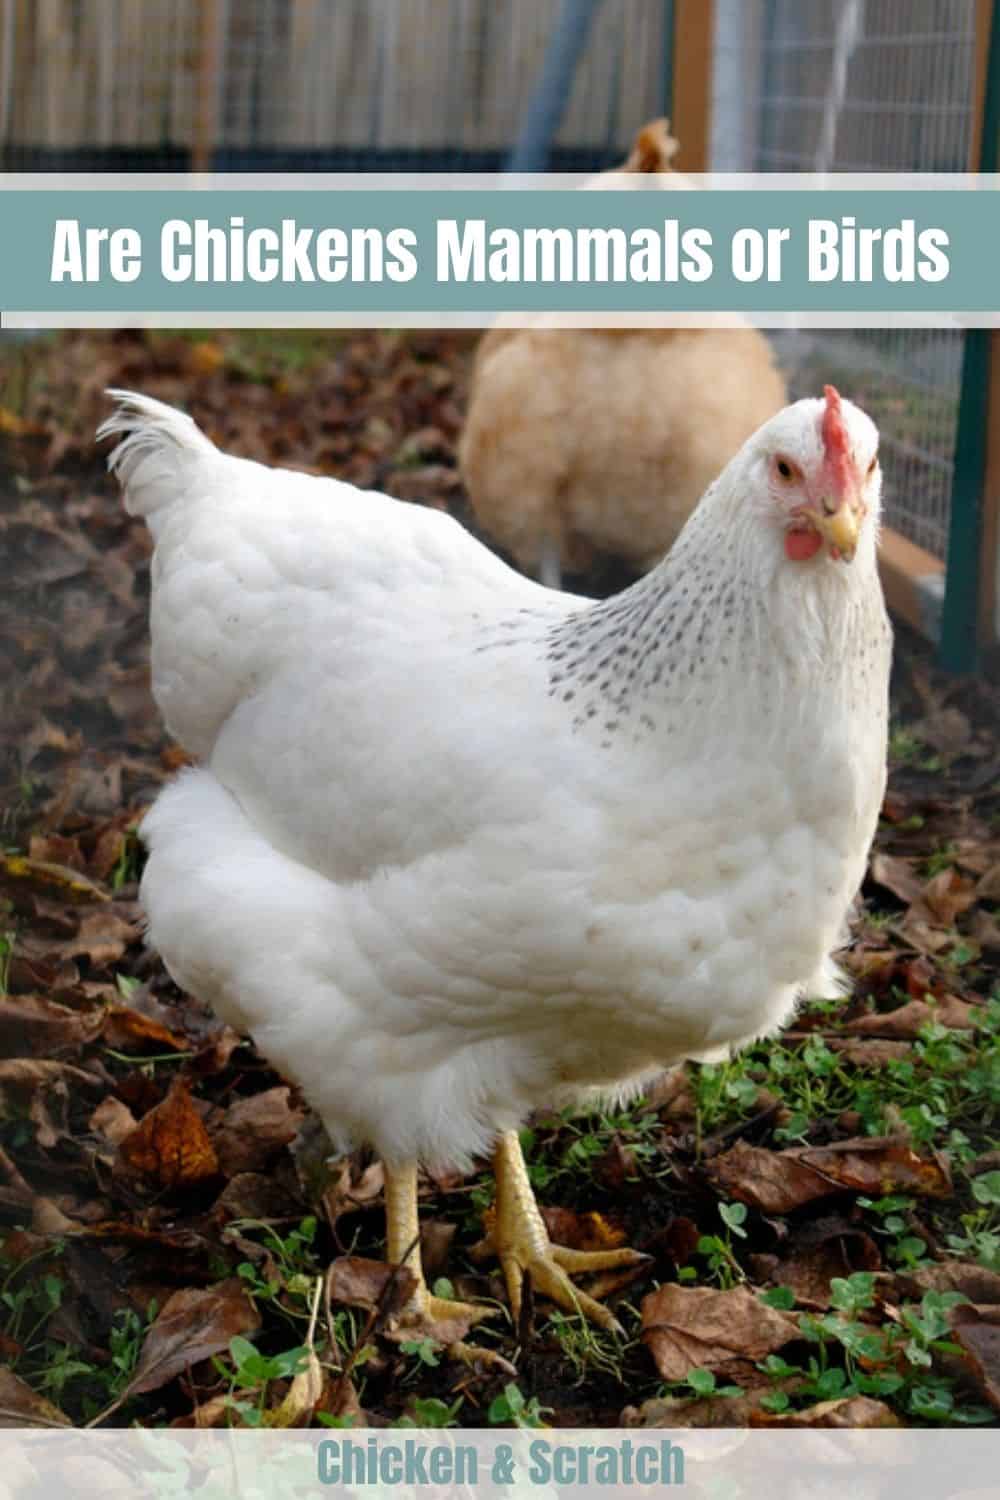 Are Chickens Mammals or Birds?